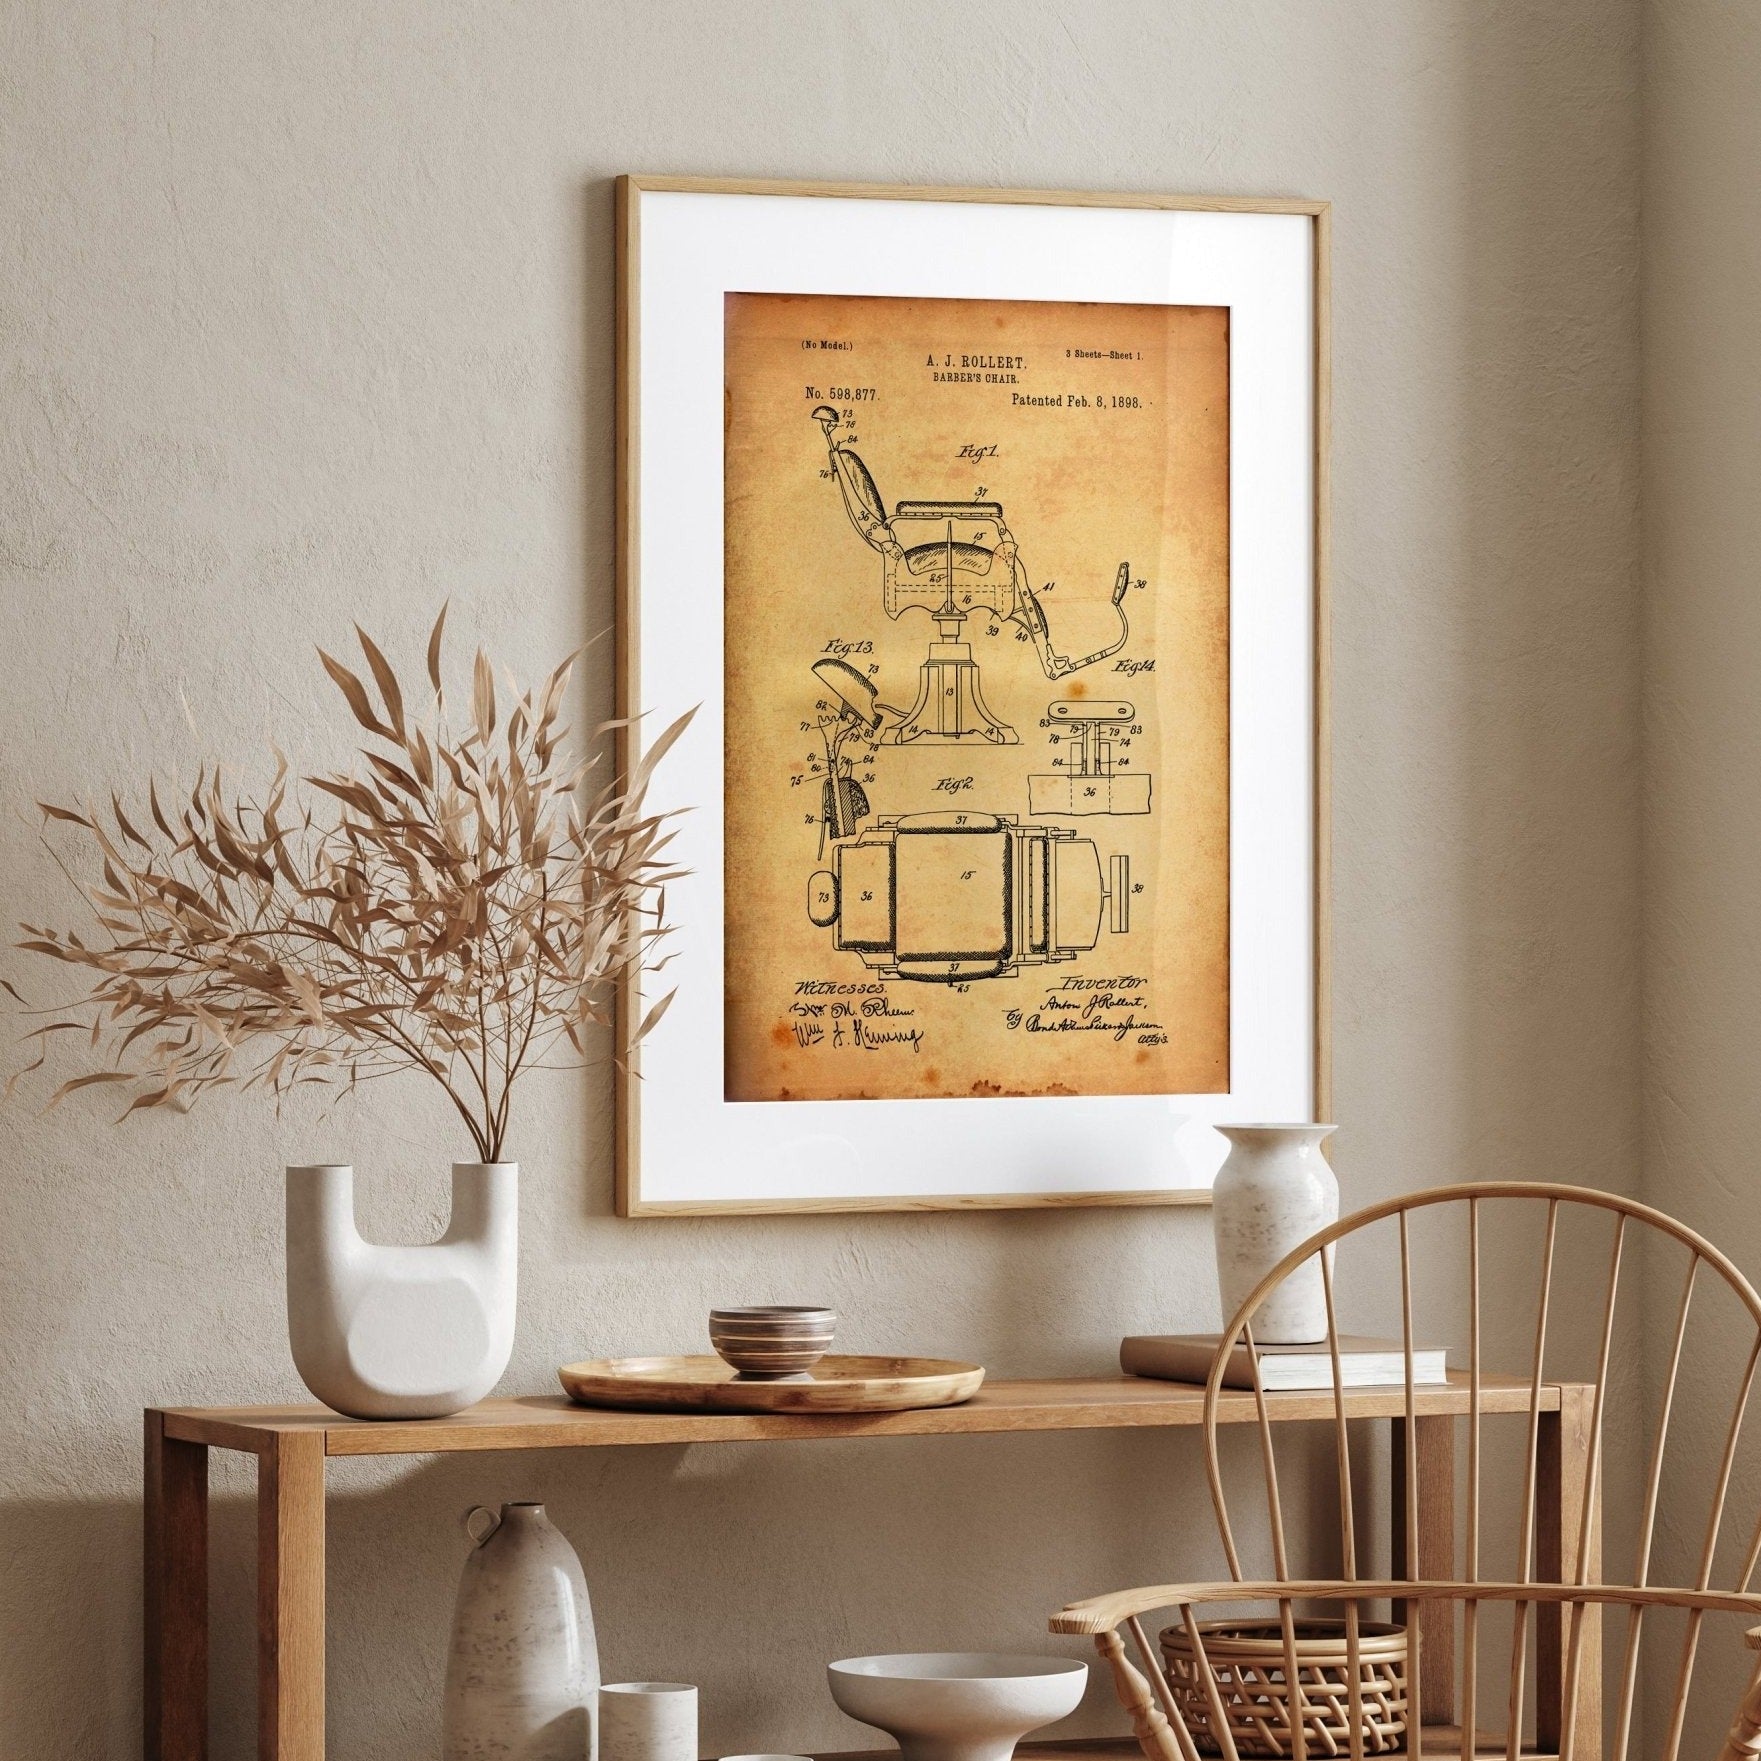 Barbers Chair Patent Print - Magic Posters